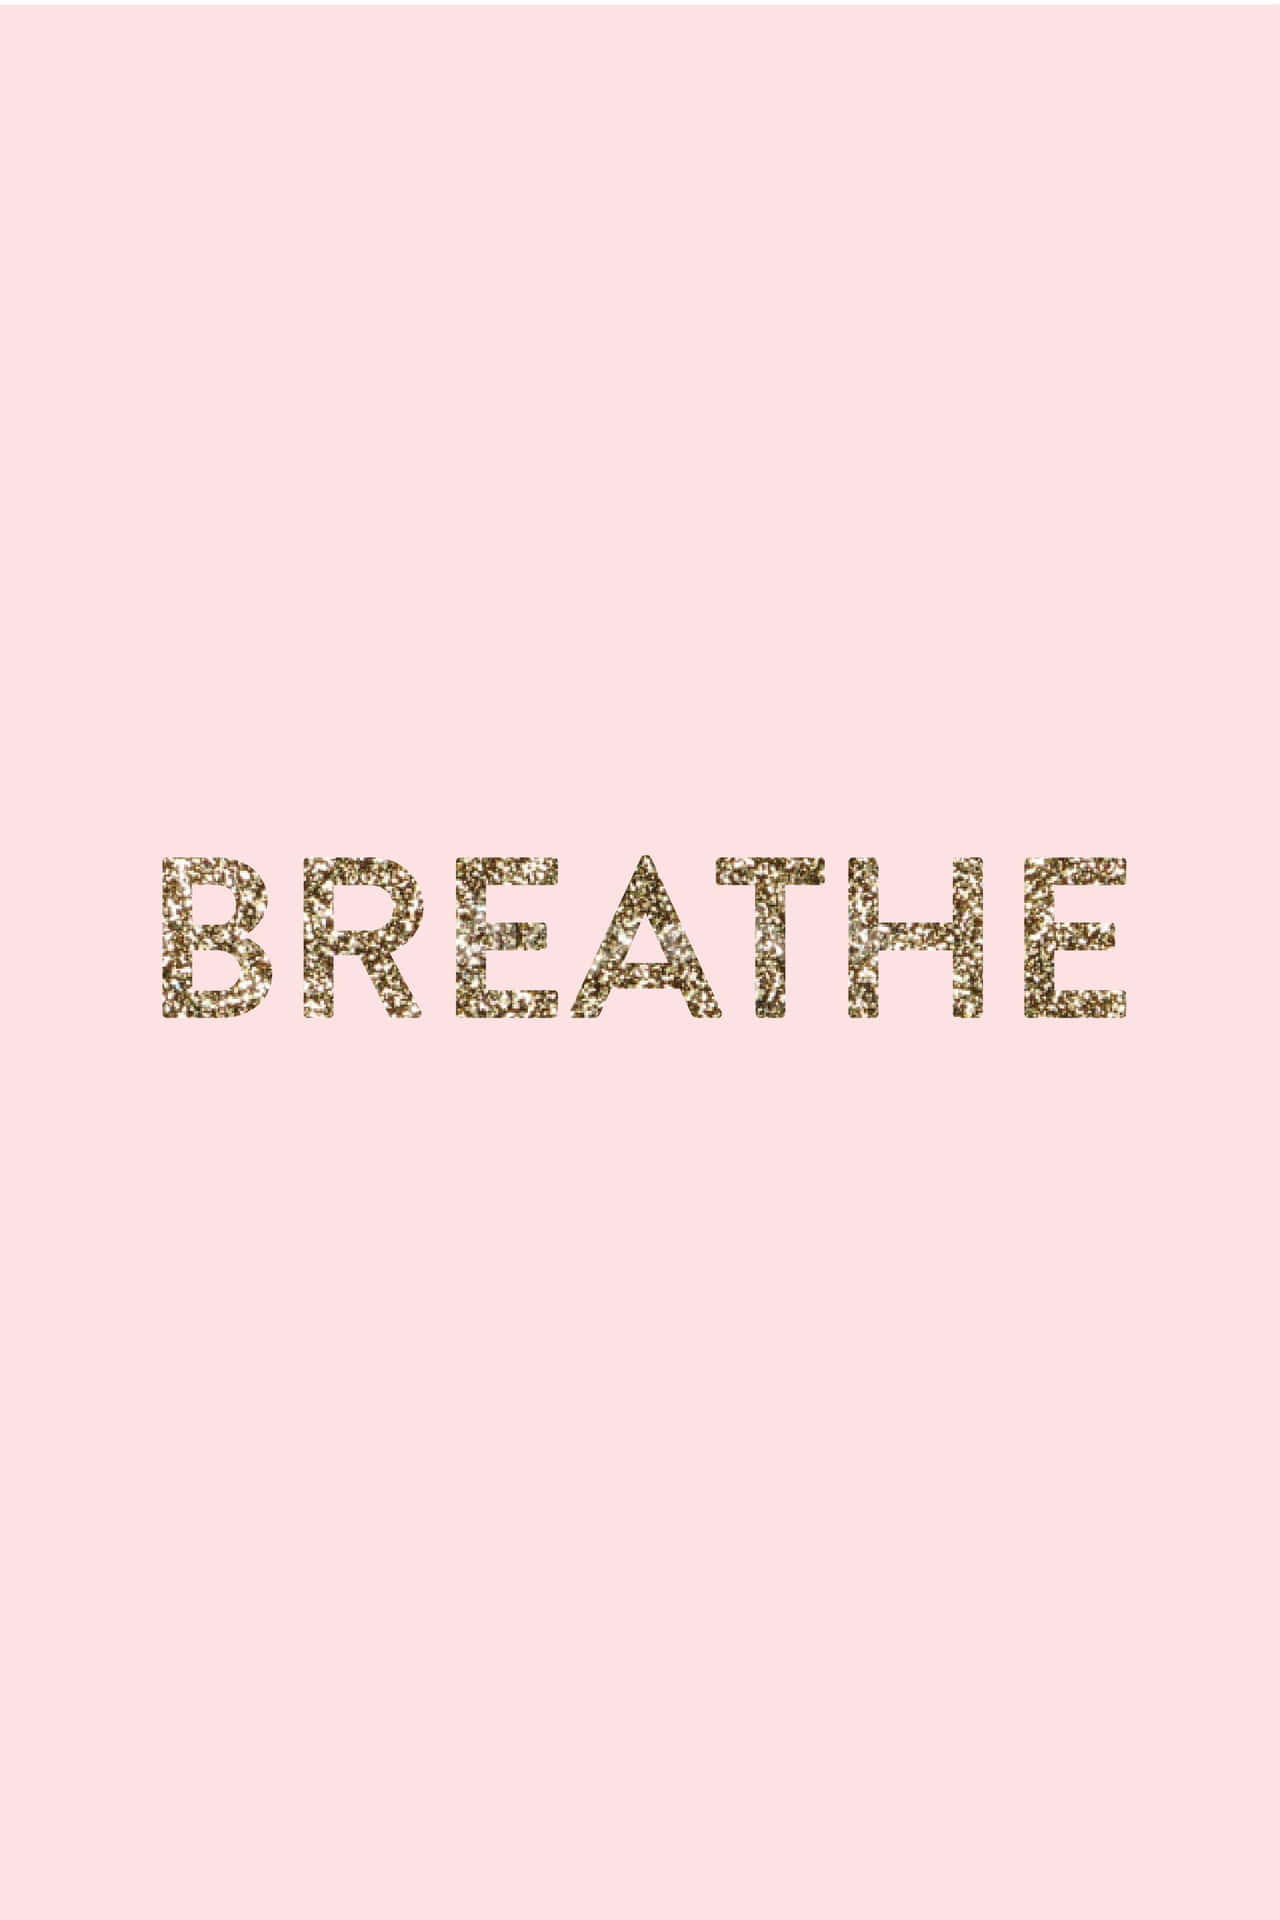 Feeling anxious? That's okay - take a break and take a deep breath. Wallpaper